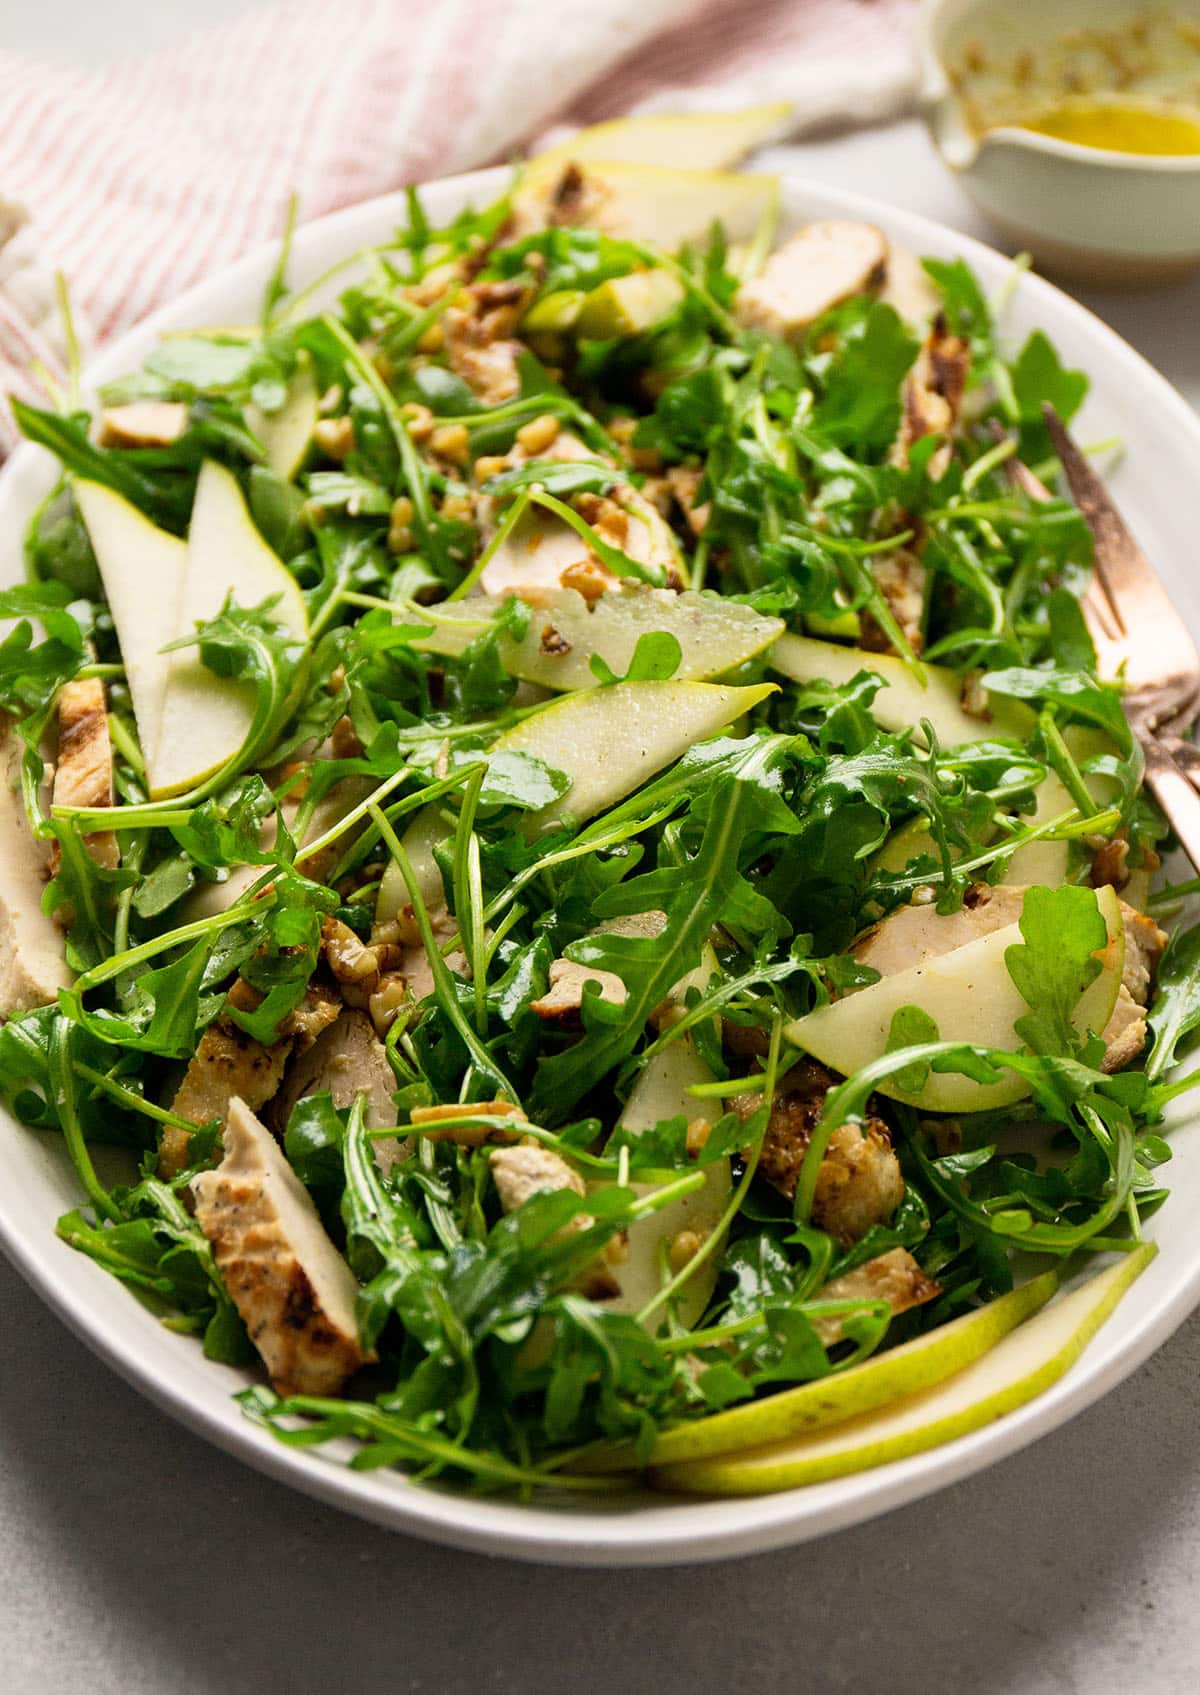 Chicken and arugula salad with lemon dressing.